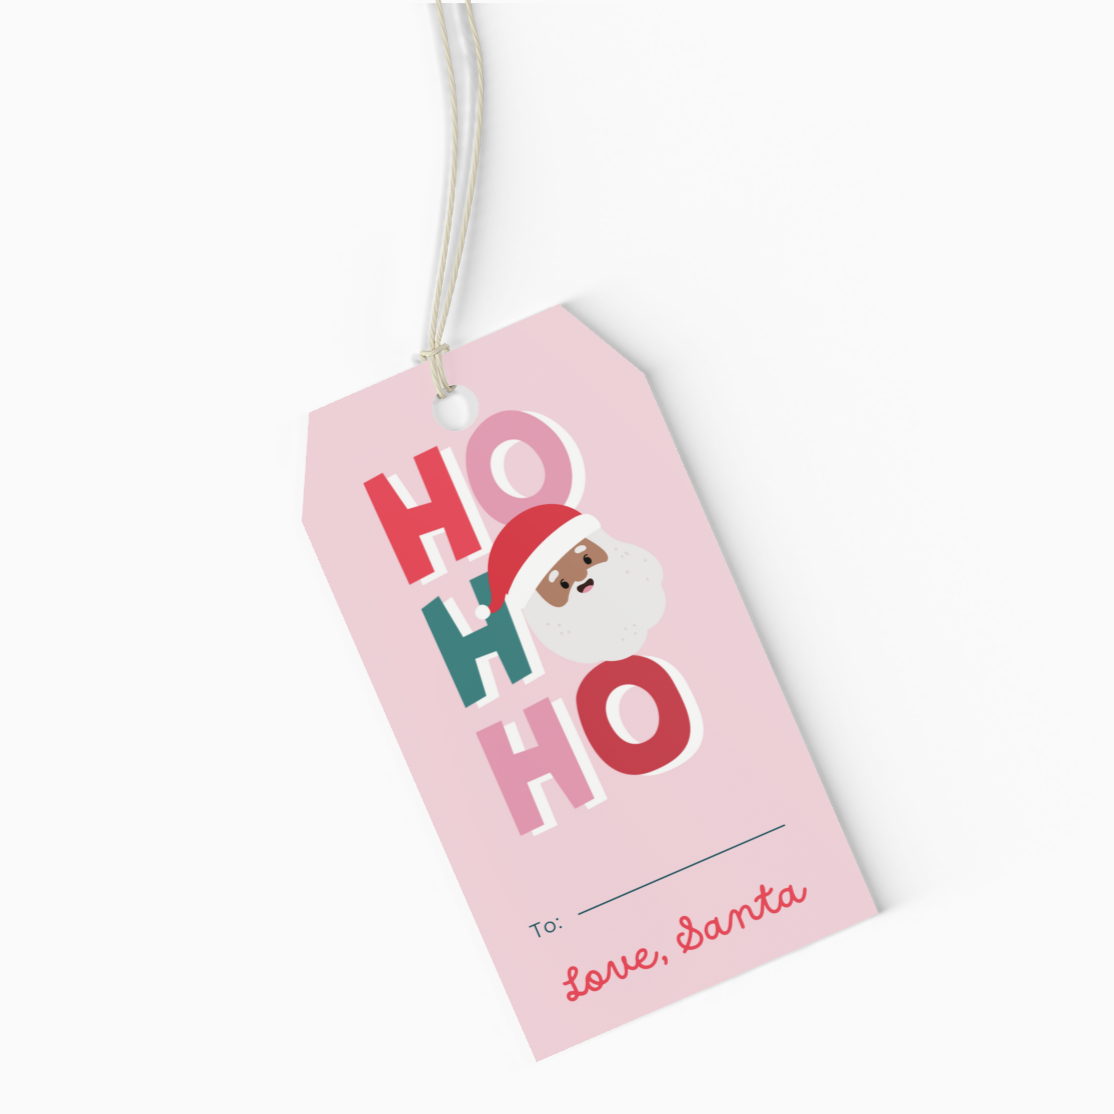 Ho Ho Ho Holiday Gift Tags